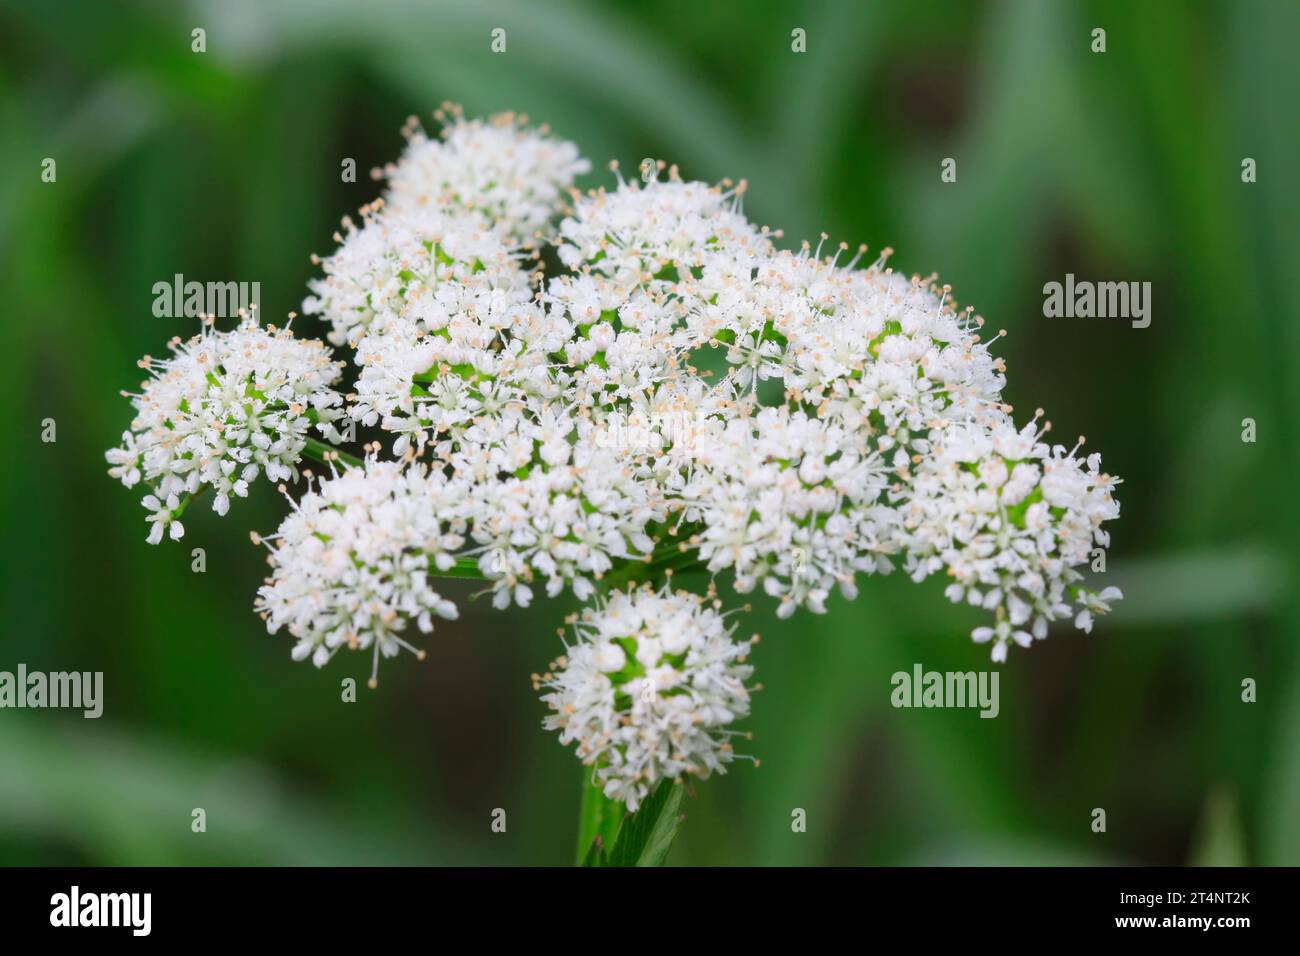 Umbrelliferae plant flowers Stock Photo